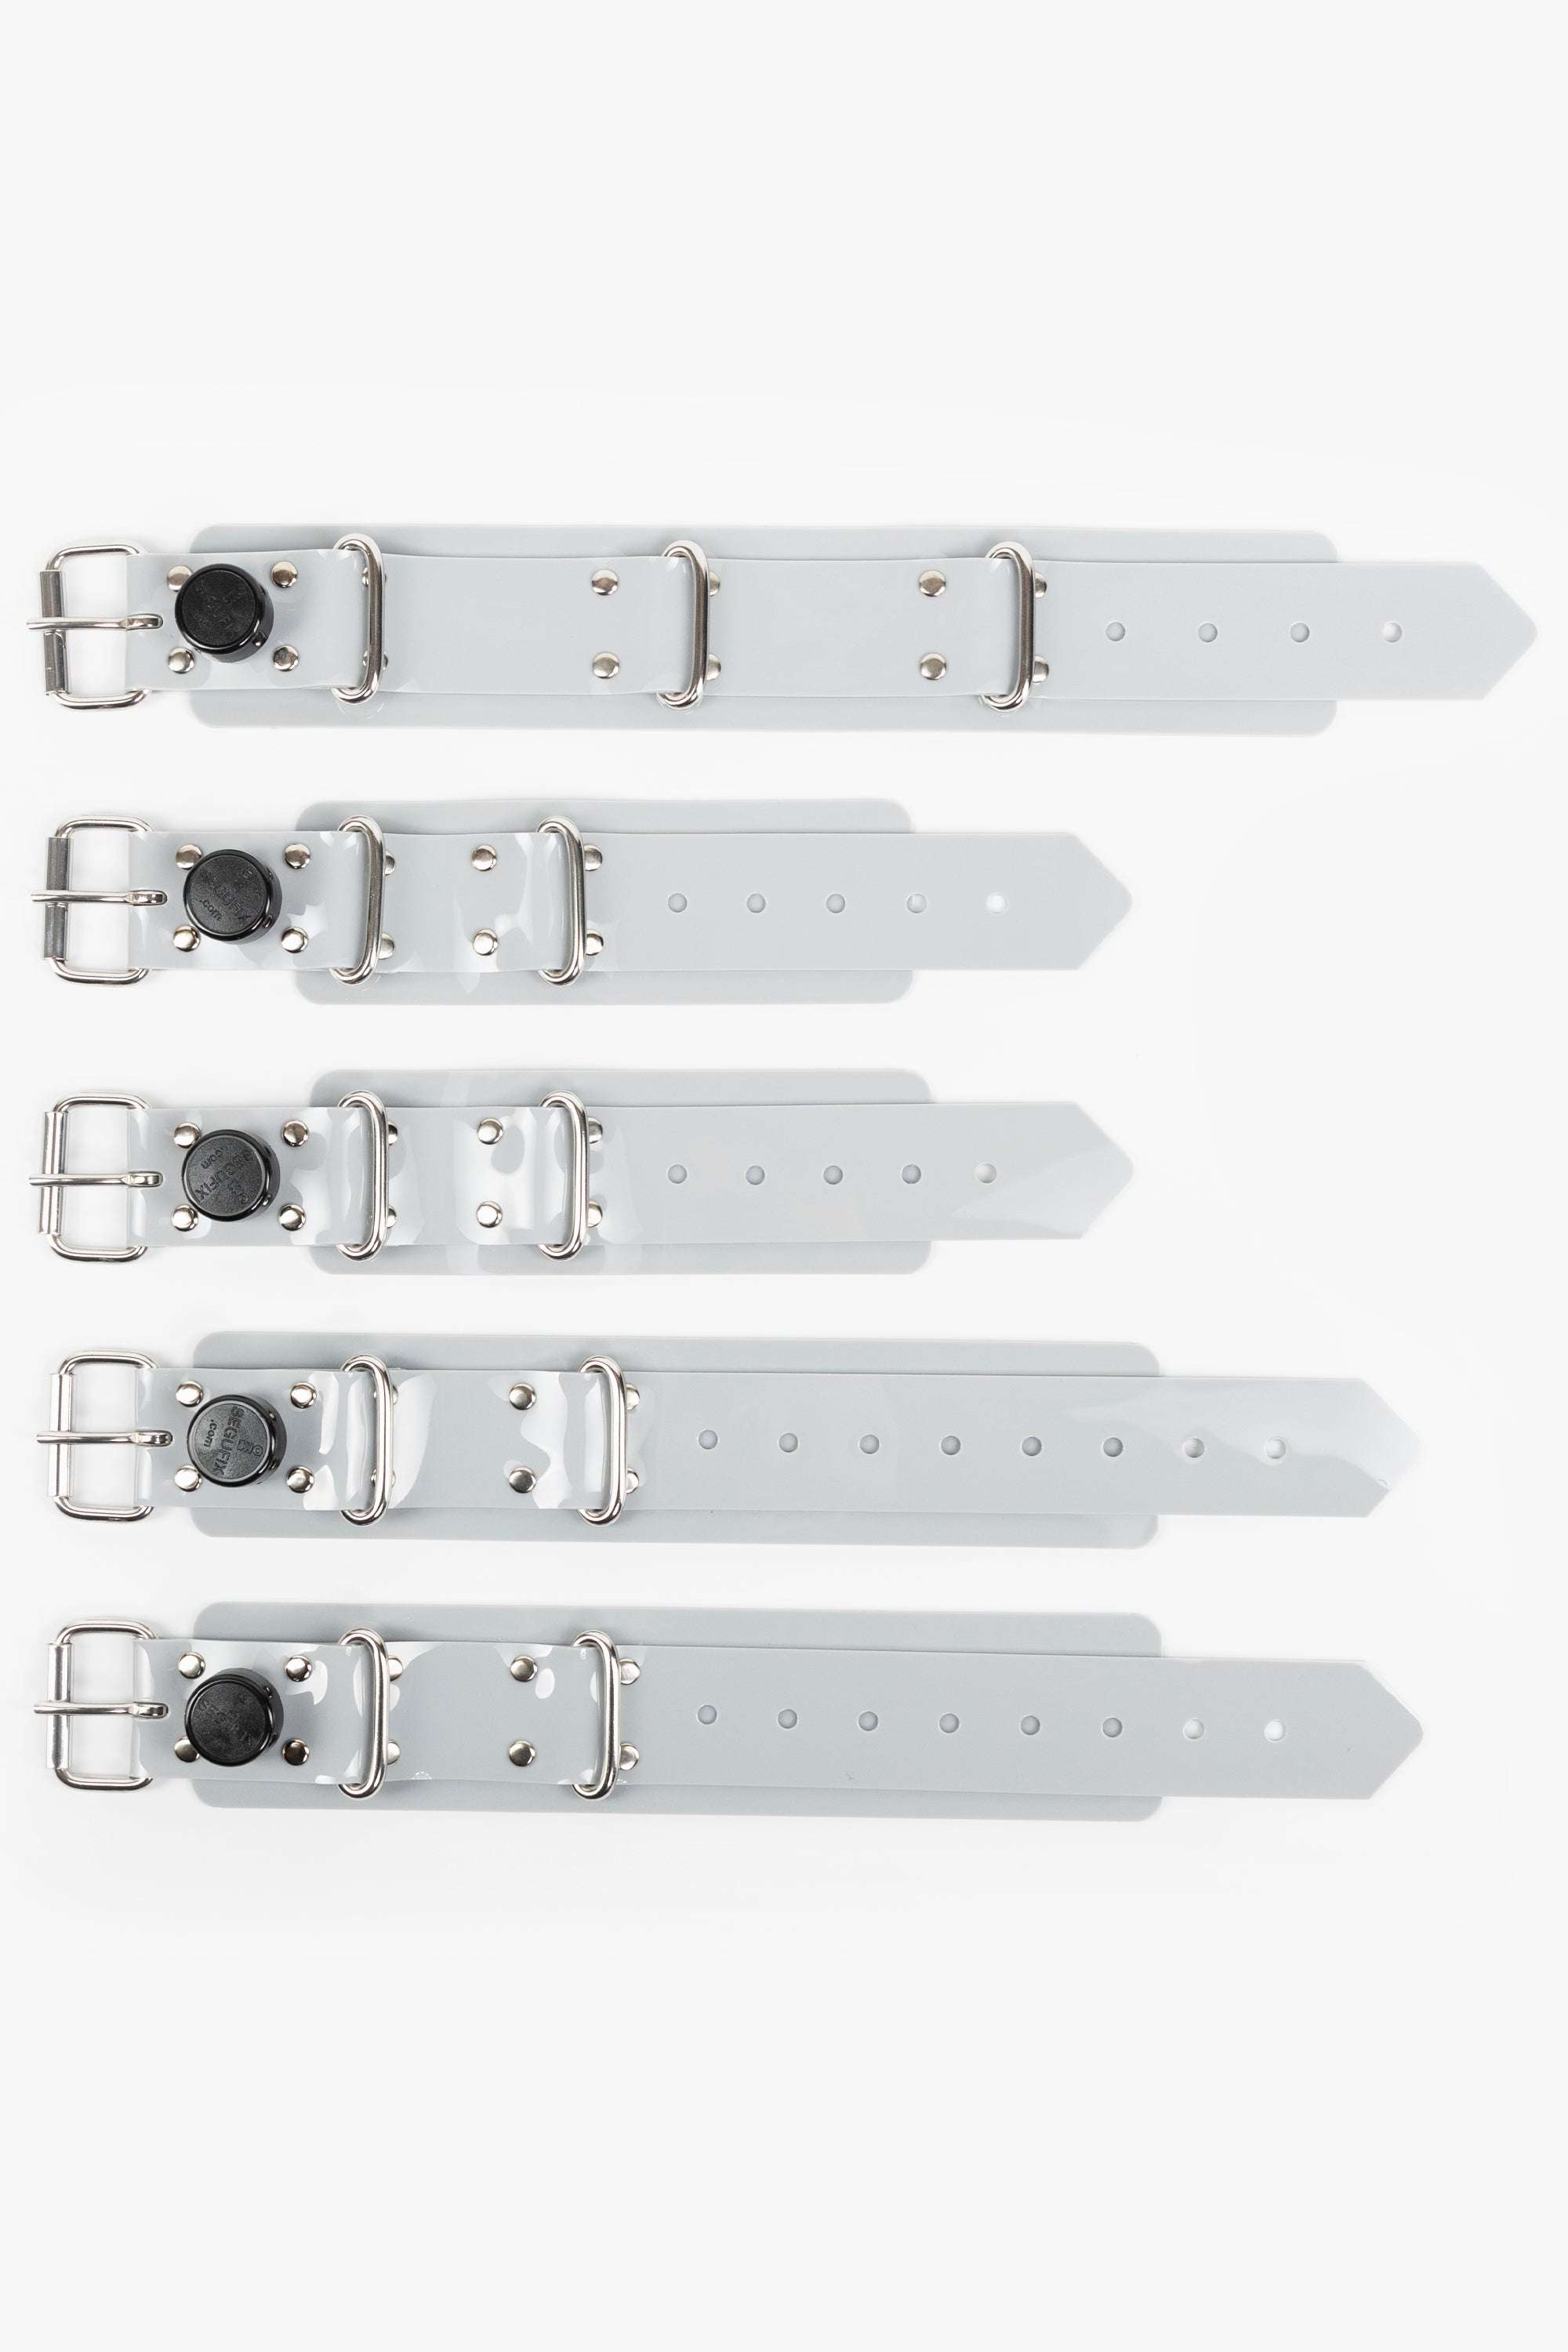 Lockable segufix collar and wrist, ankle cuffs set, light grey/chrome